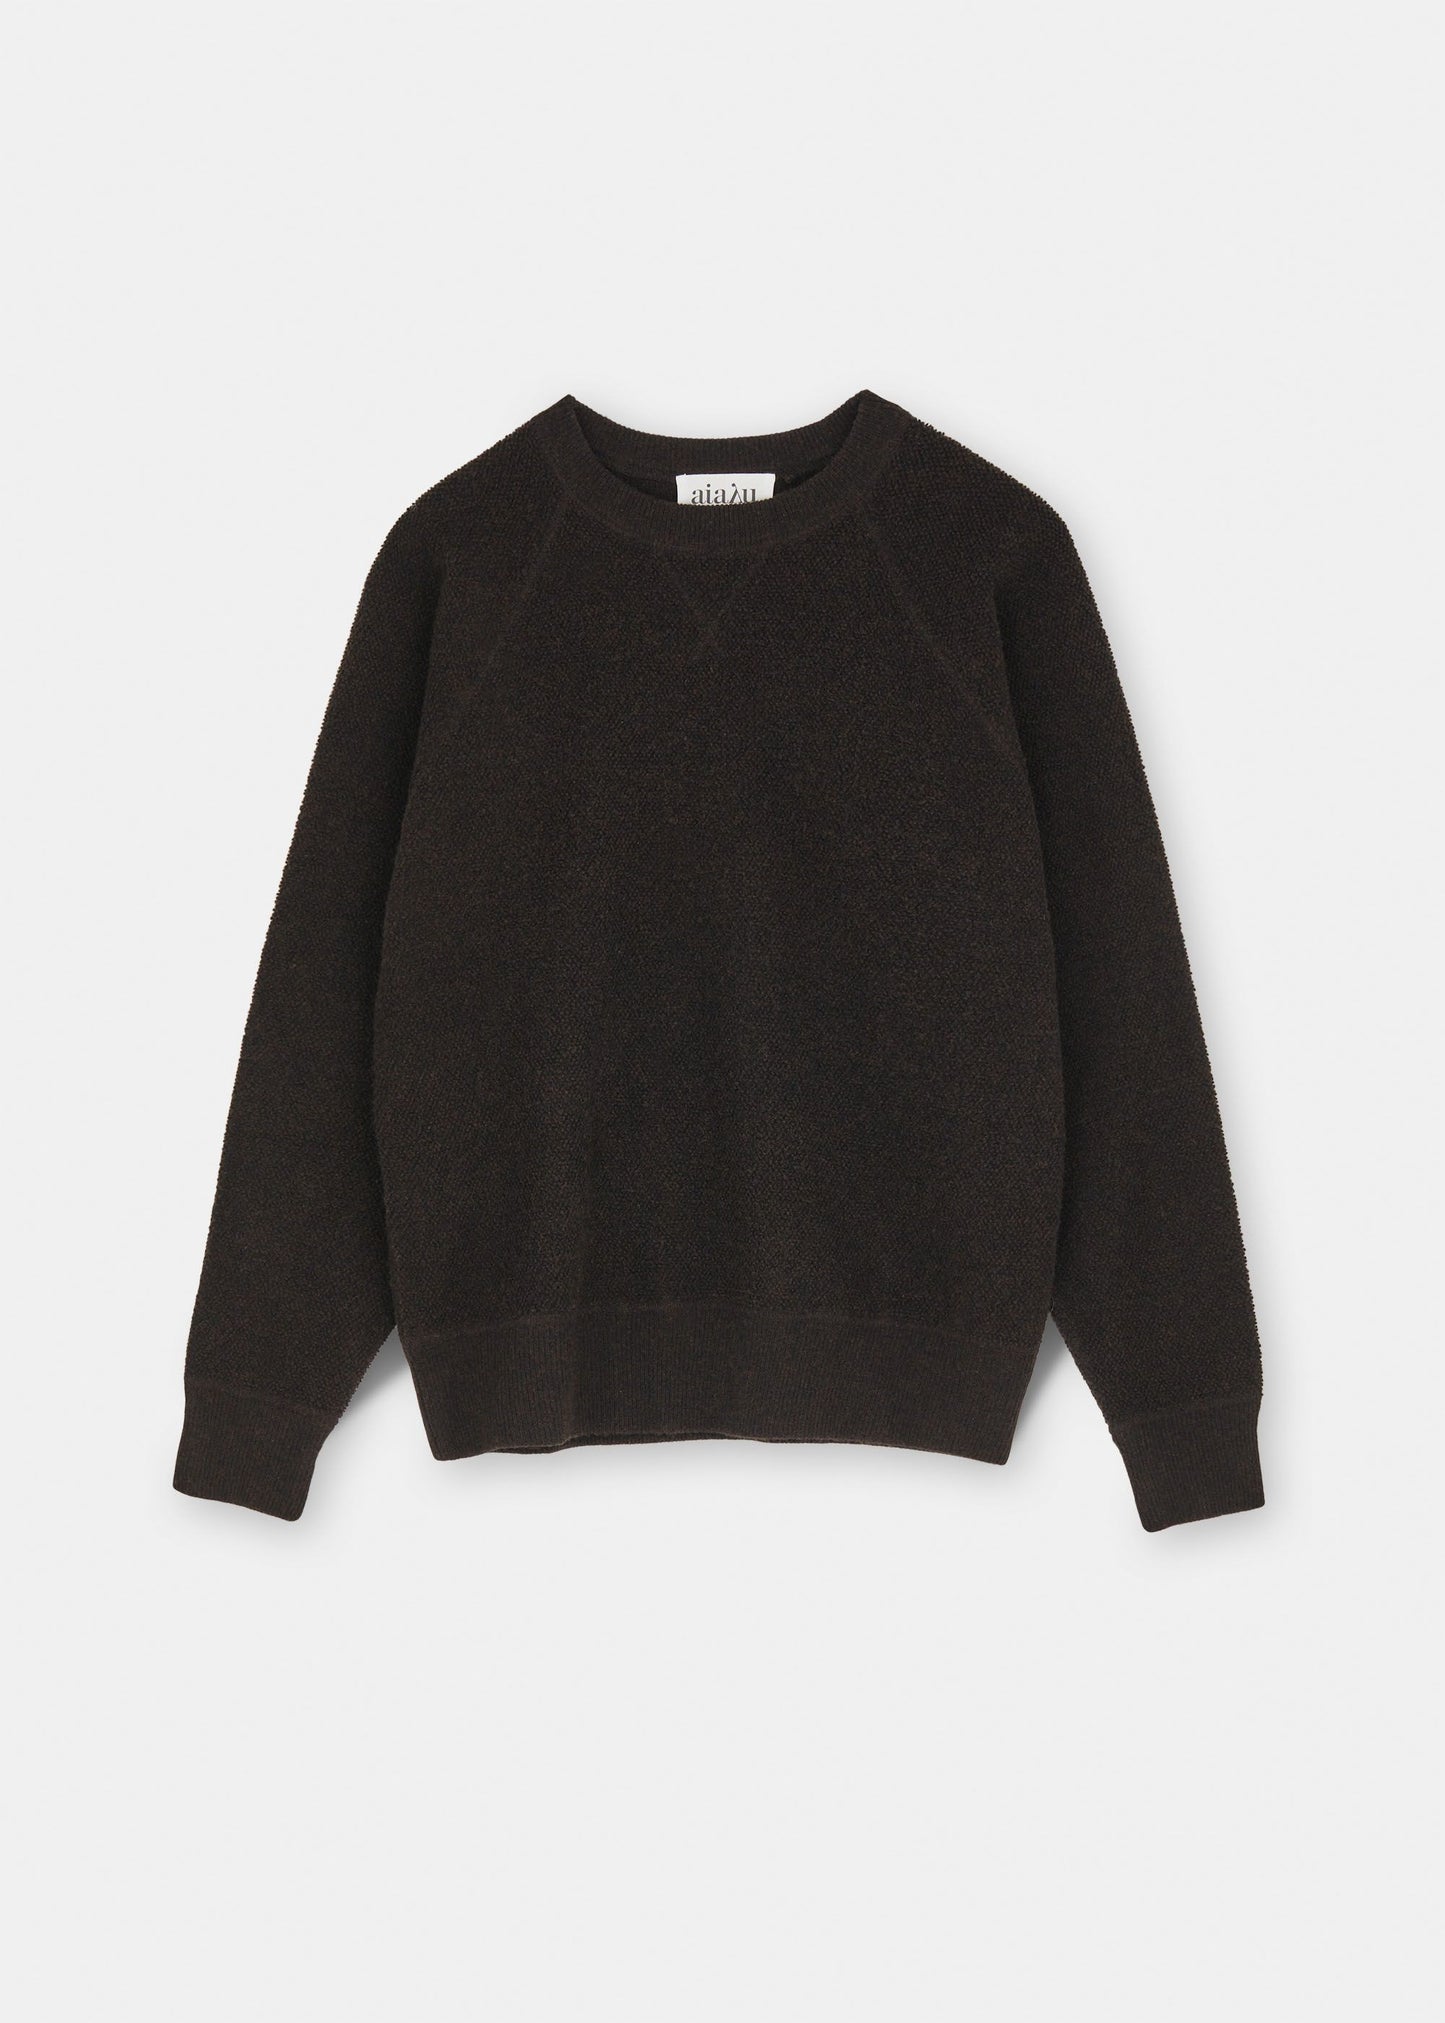 Aiayu "April knitted sweatshirt" Dark Brown